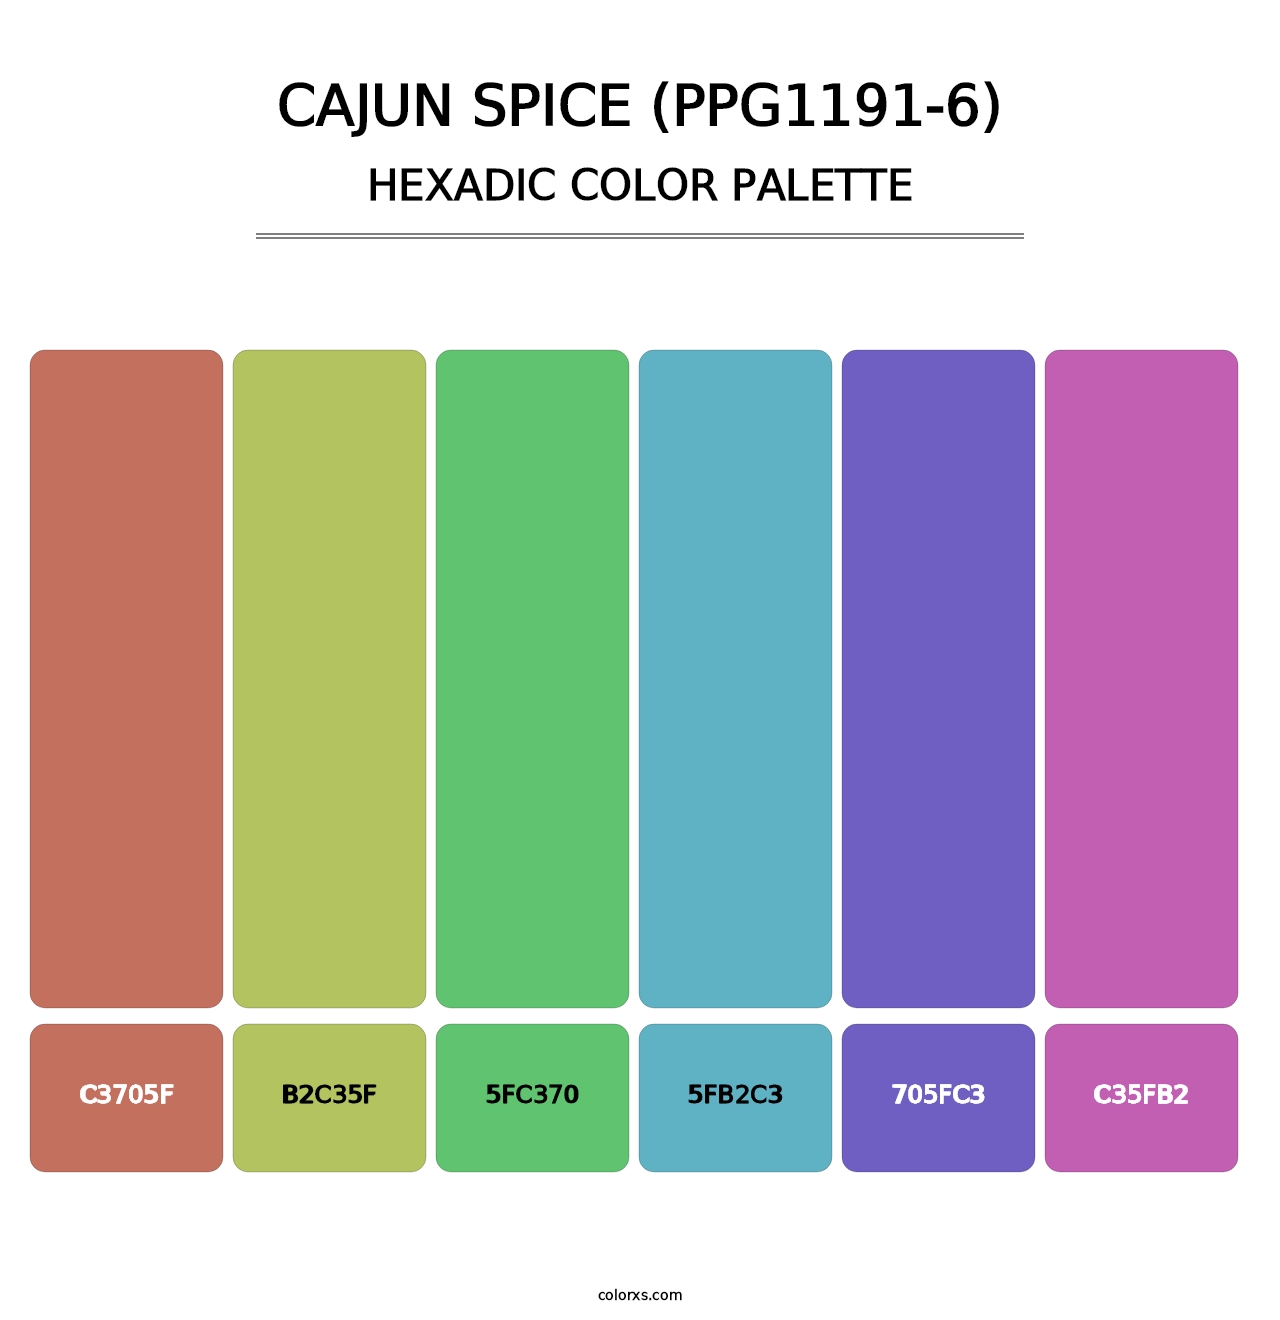 Cajun Spice (PPG1191-6) - Hexadic Color Palette